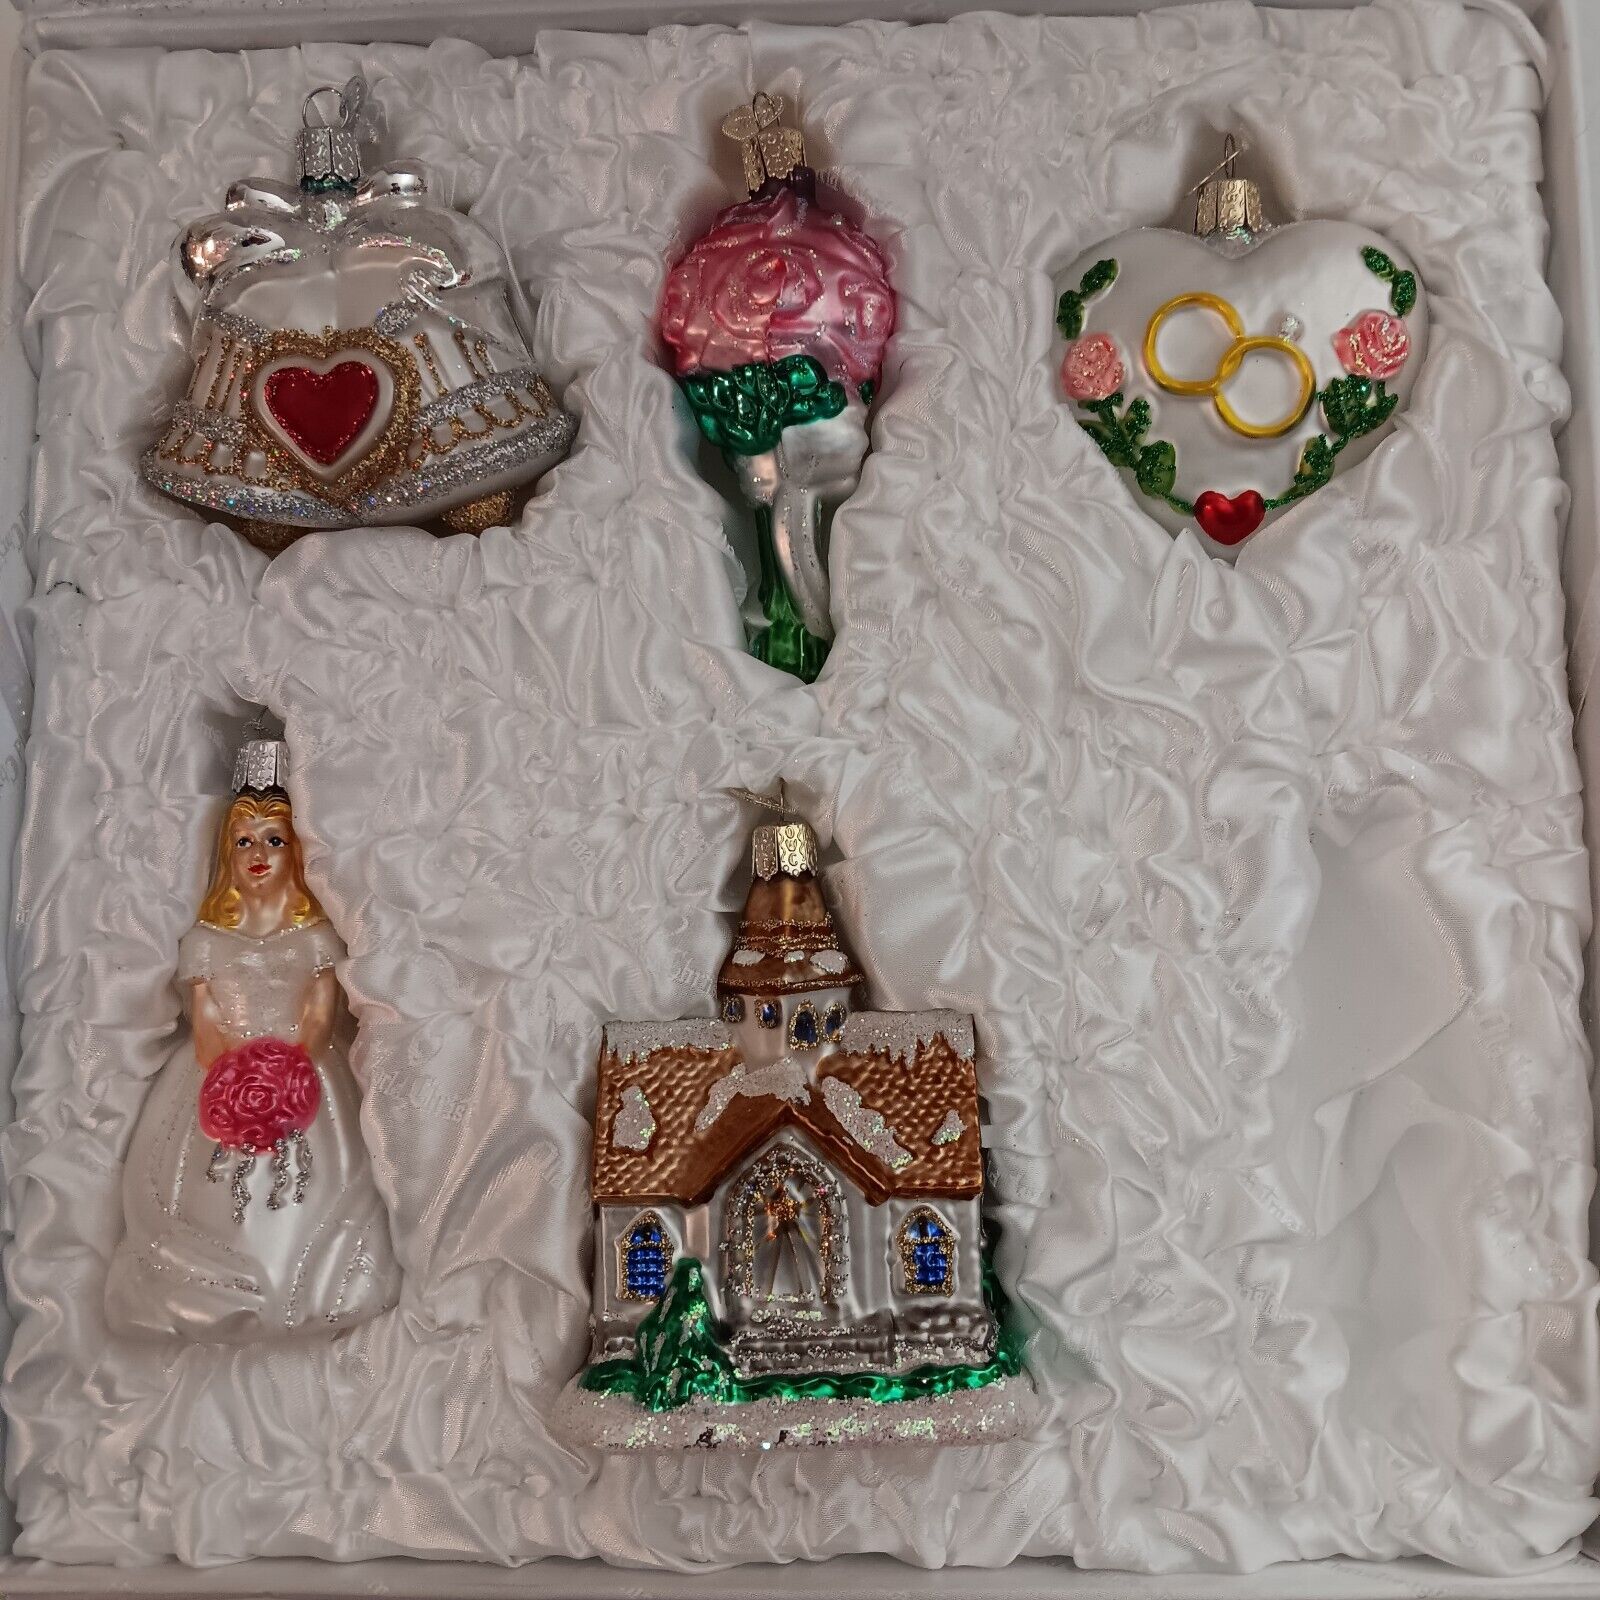 Old World Christmas WEDDING / Bridal ORNAMENTS (5) Piece Set - Blown Glass